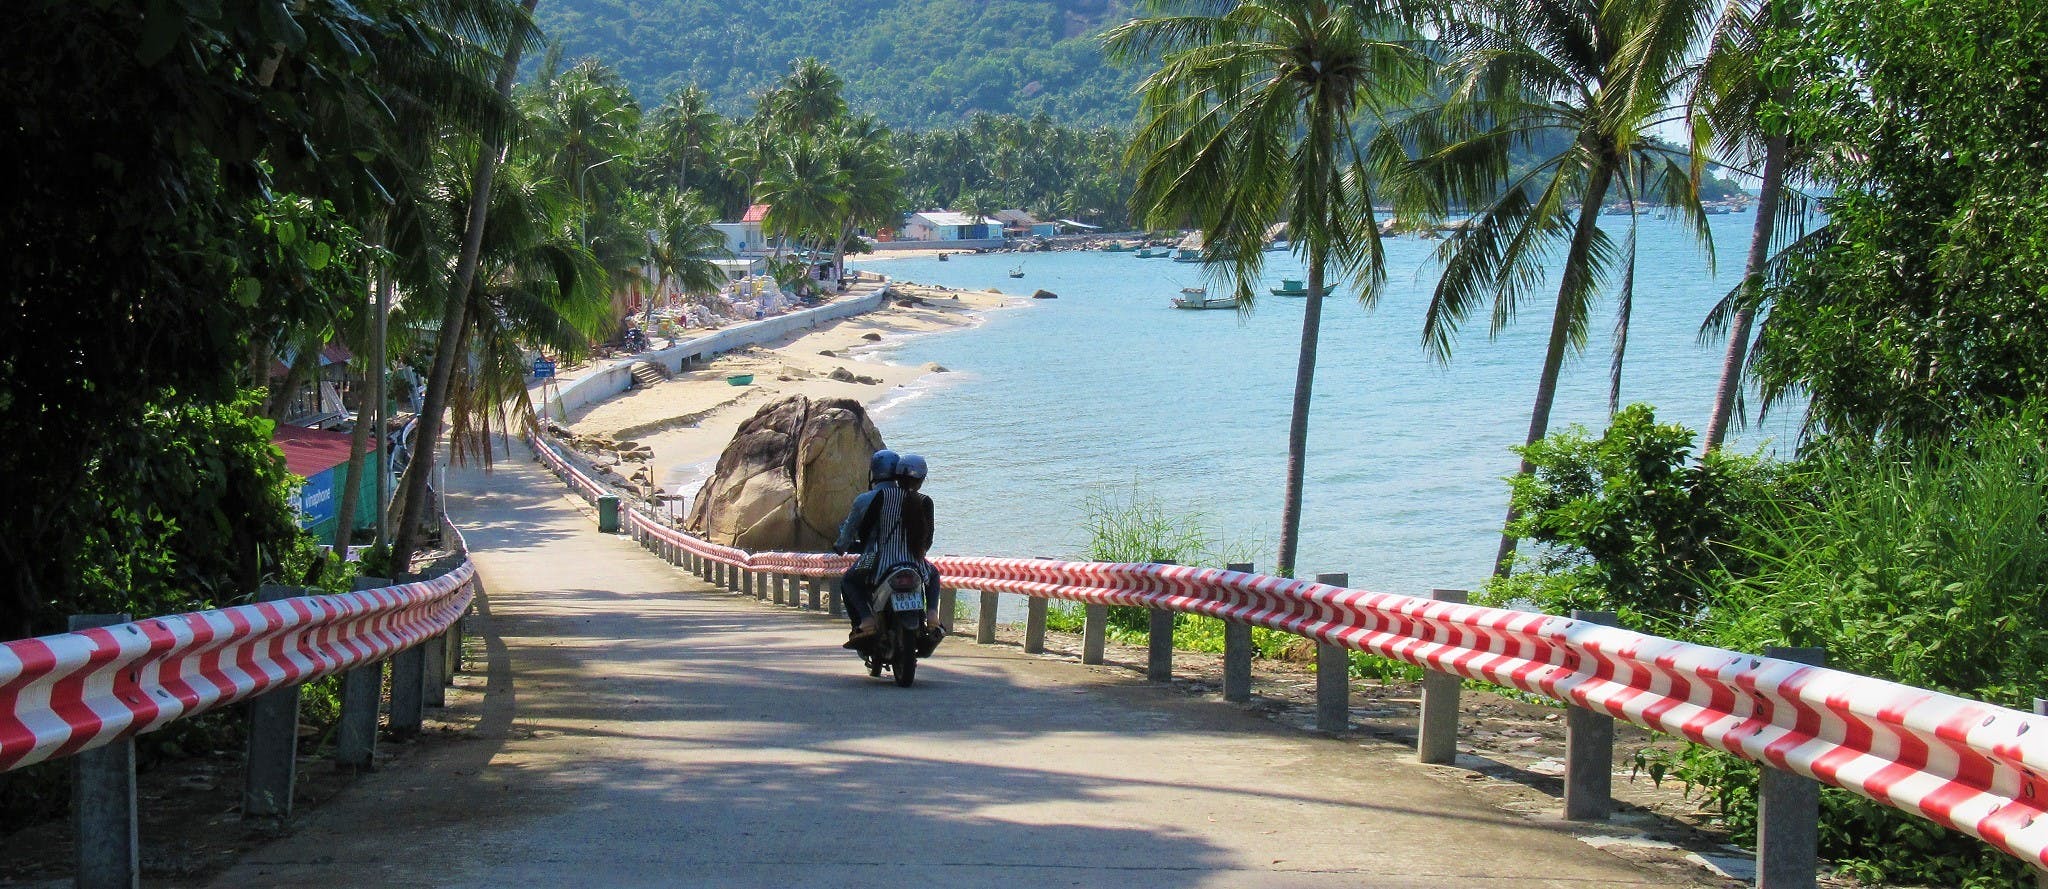 Hon Son Island travel guide, Vietnam